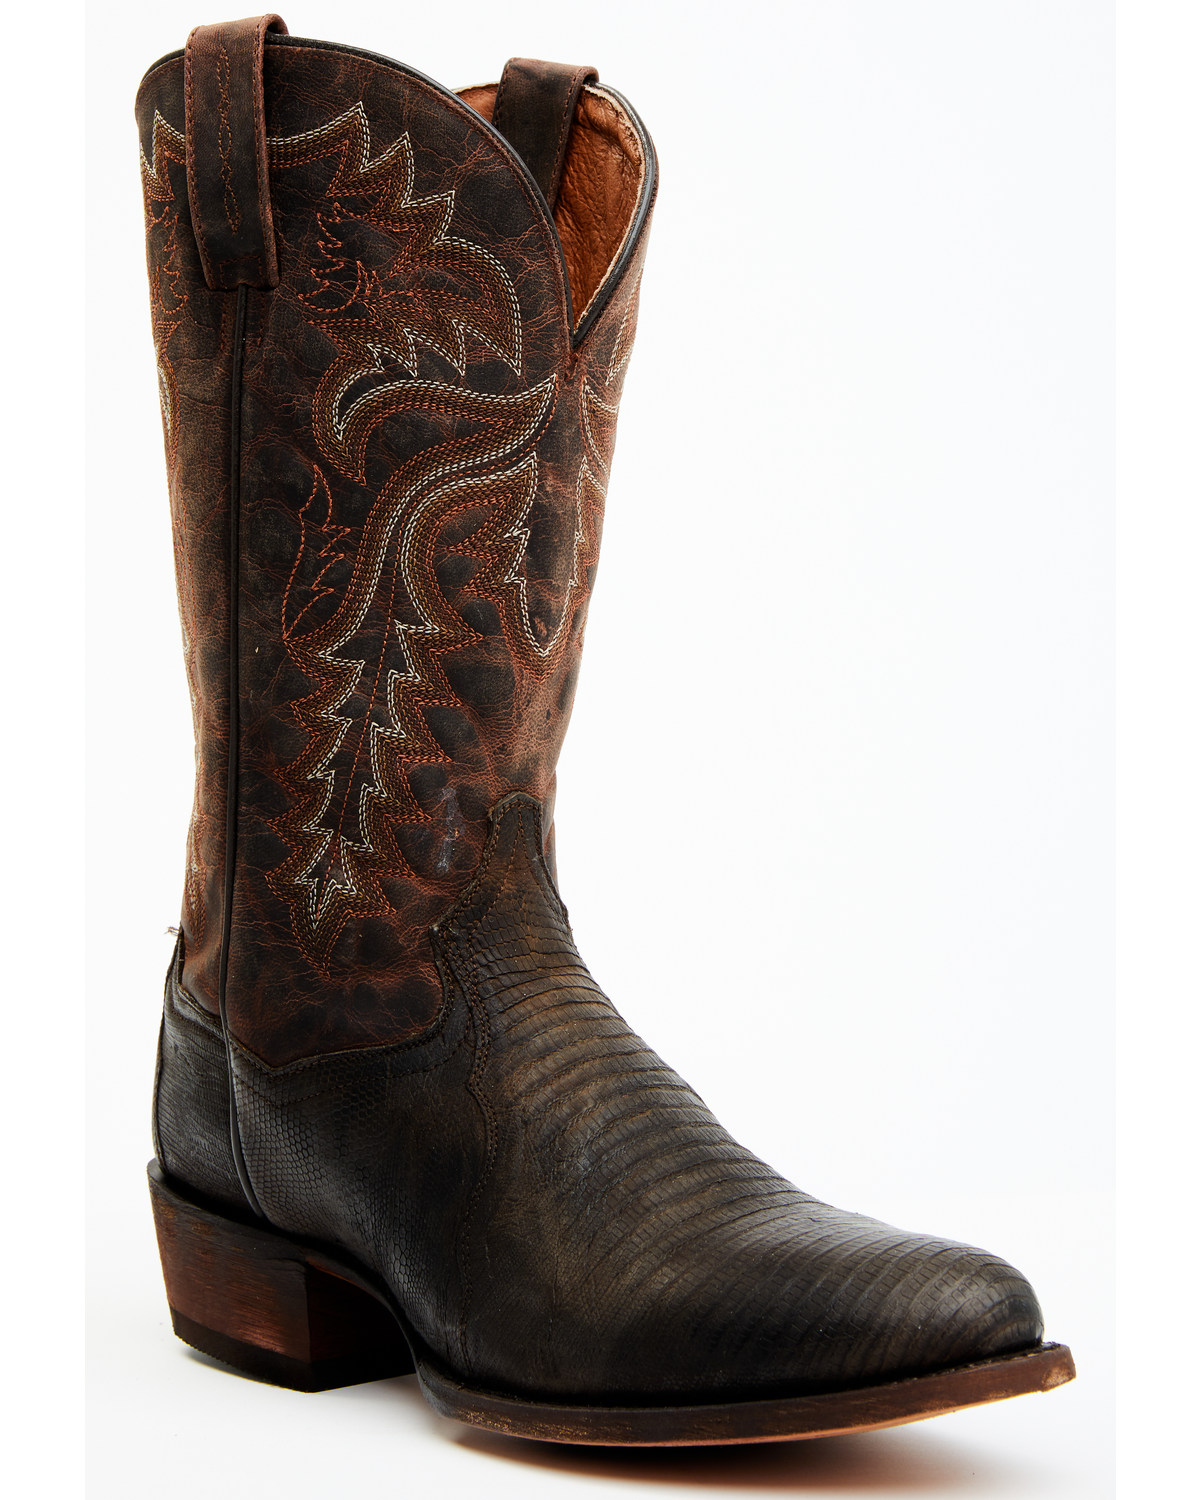 Dan Post Men's Exotic Teju Lizard Leather Tall Western Boots - Round Toe